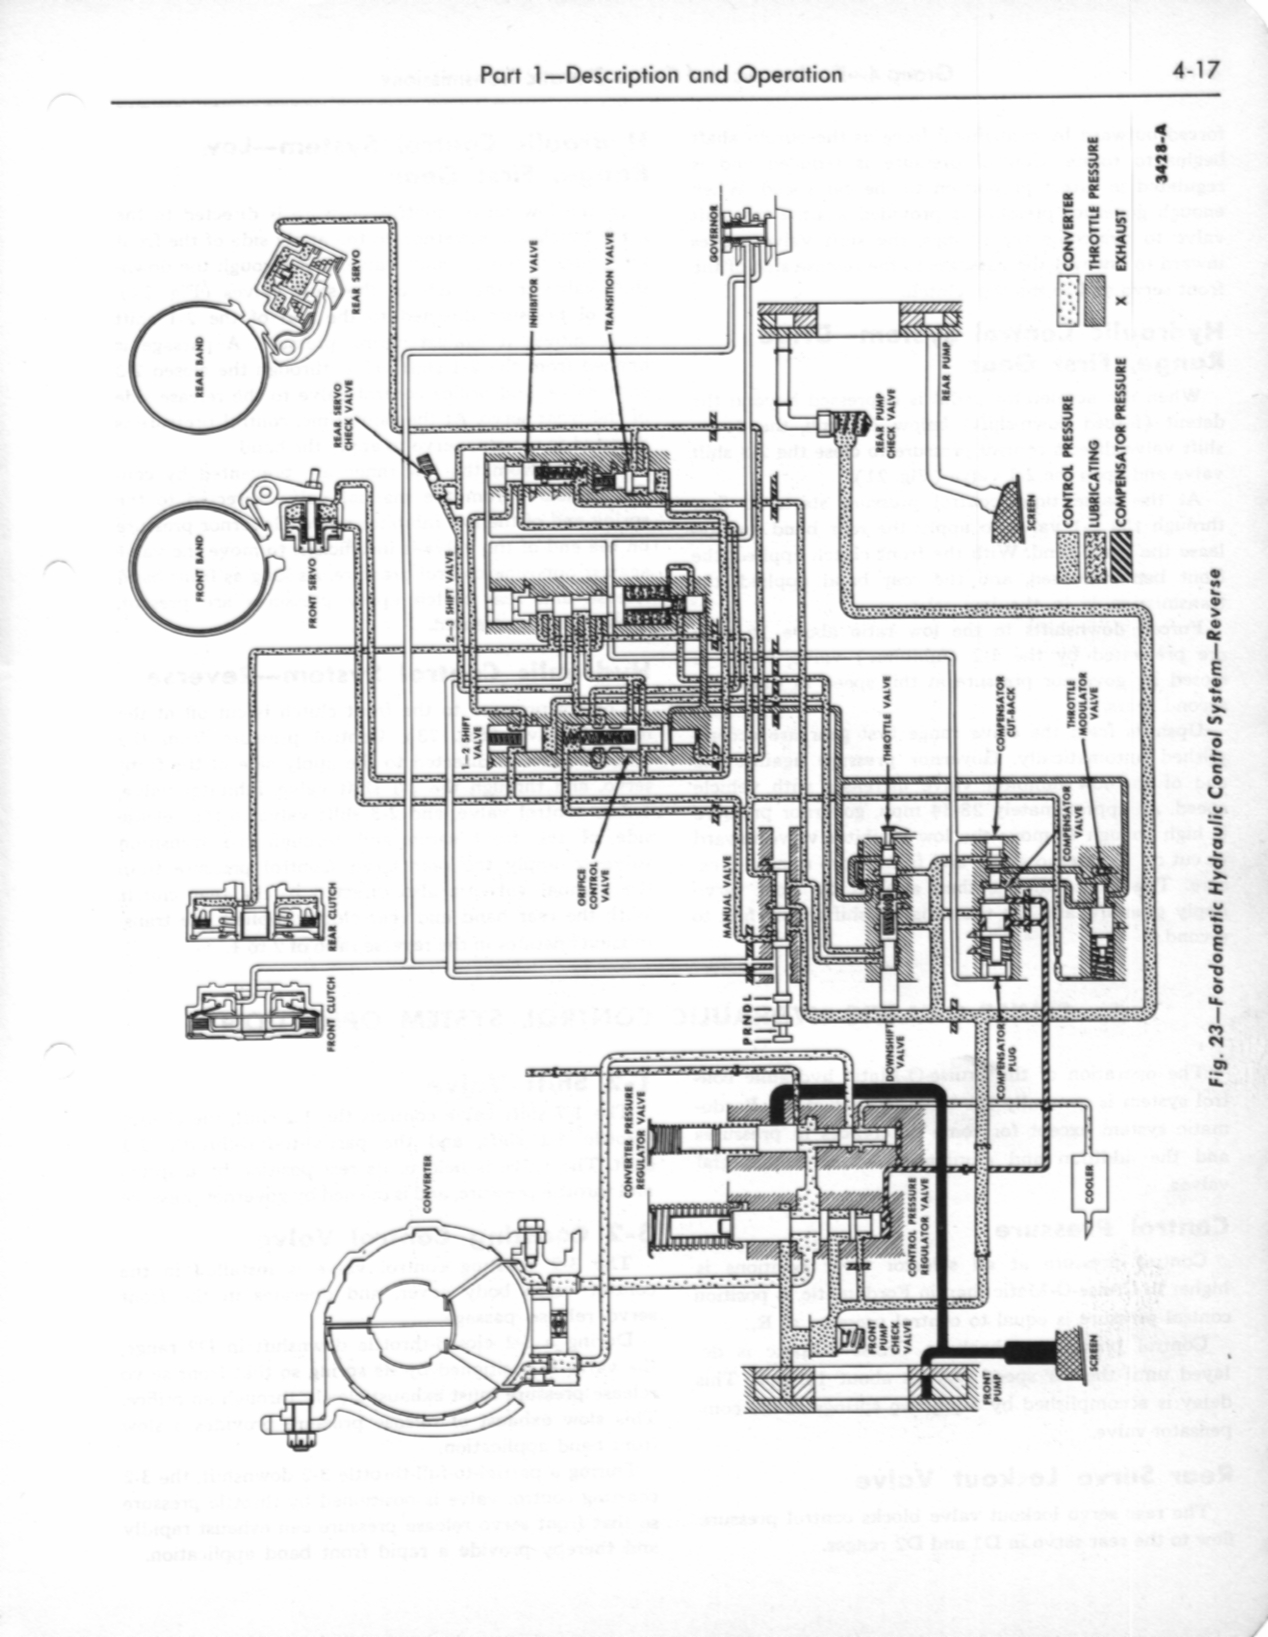 1958 Ford cruise-o-matic transmission #8